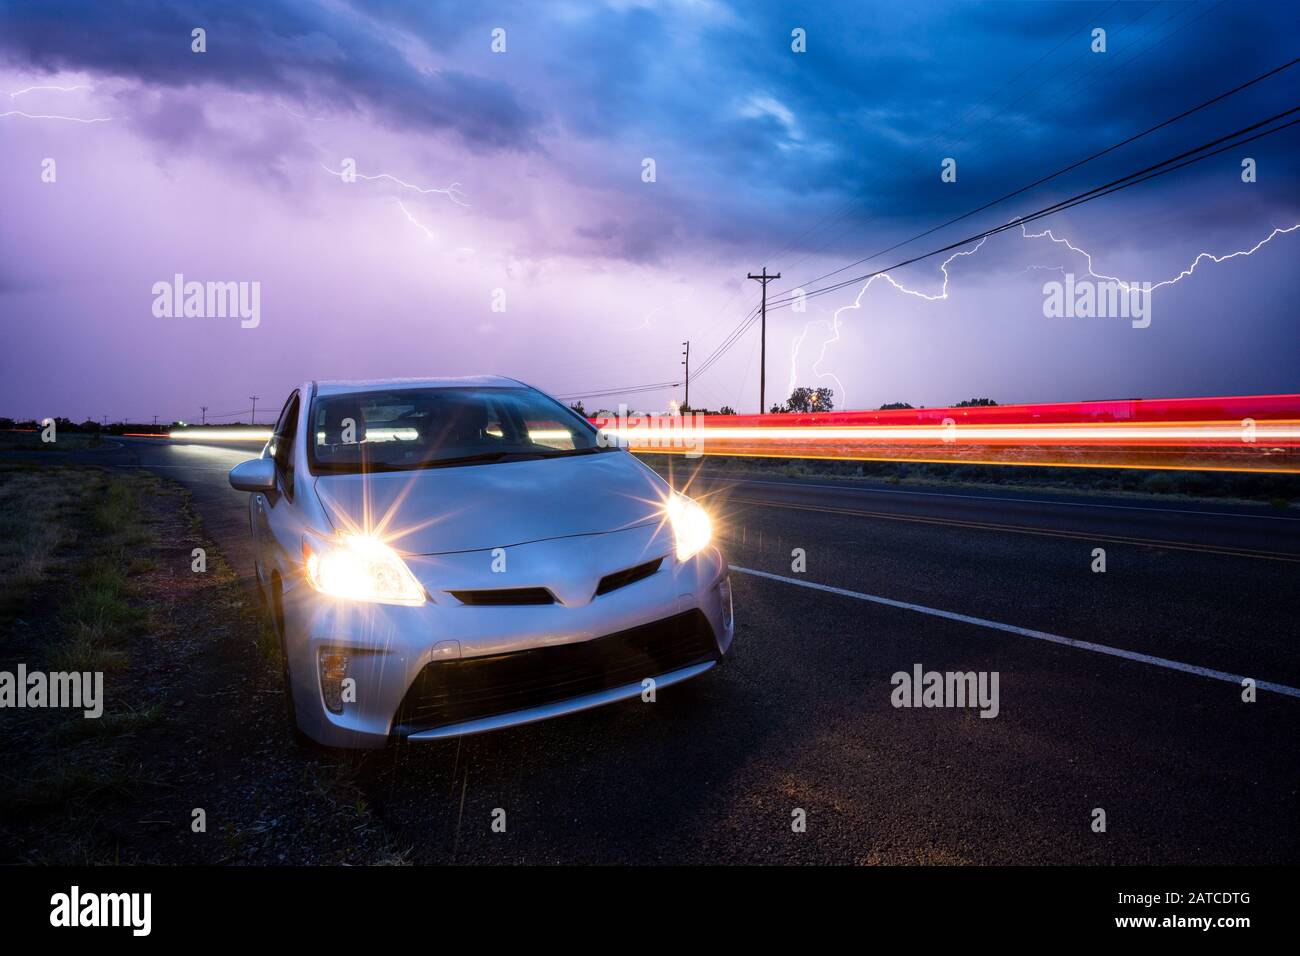 Auto parkte Am Straßenrand bei einem Blitzsturm, Grants, New Mexico, USA Stockfoto